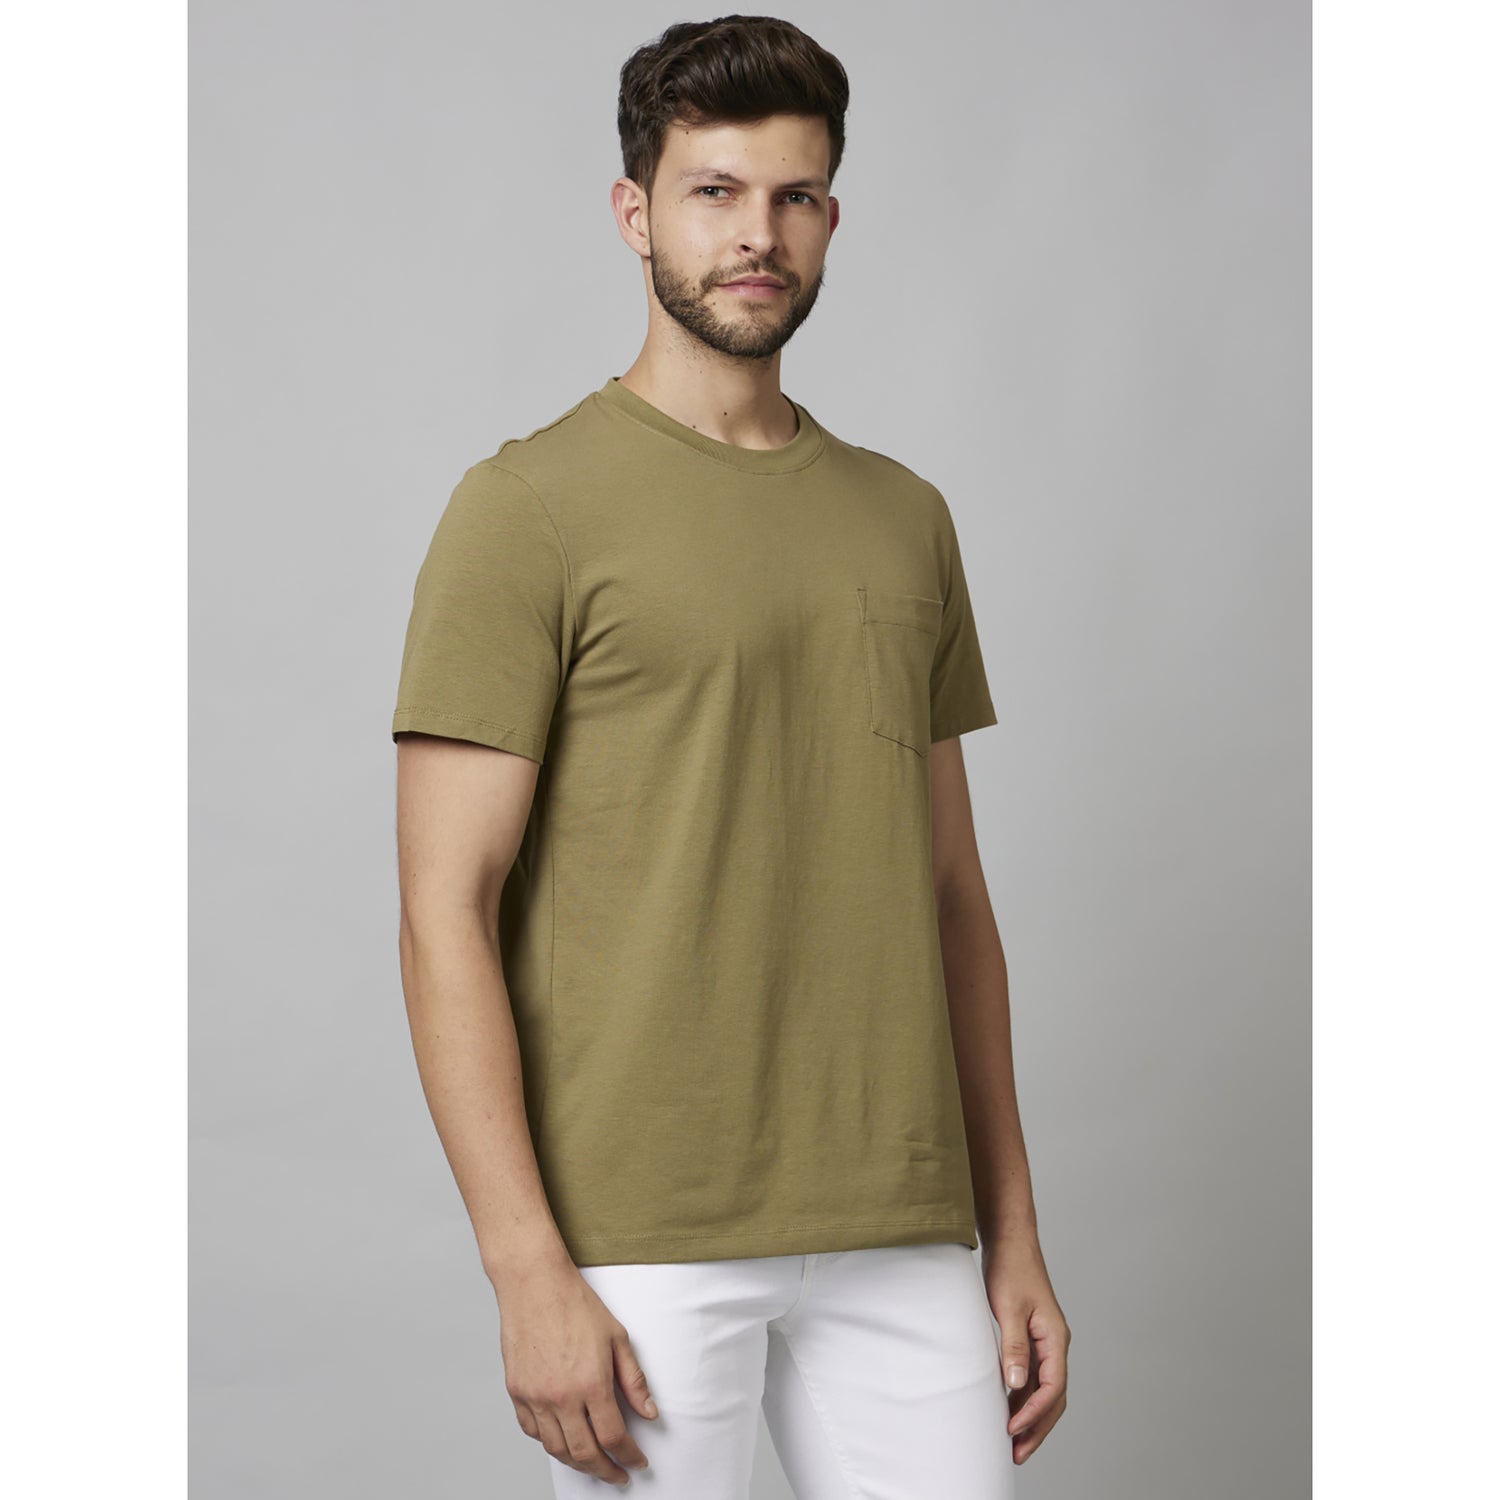 Khaki Solid Short Sleeve Cotton Poly Blend T-Shirts (DECOMFORT)